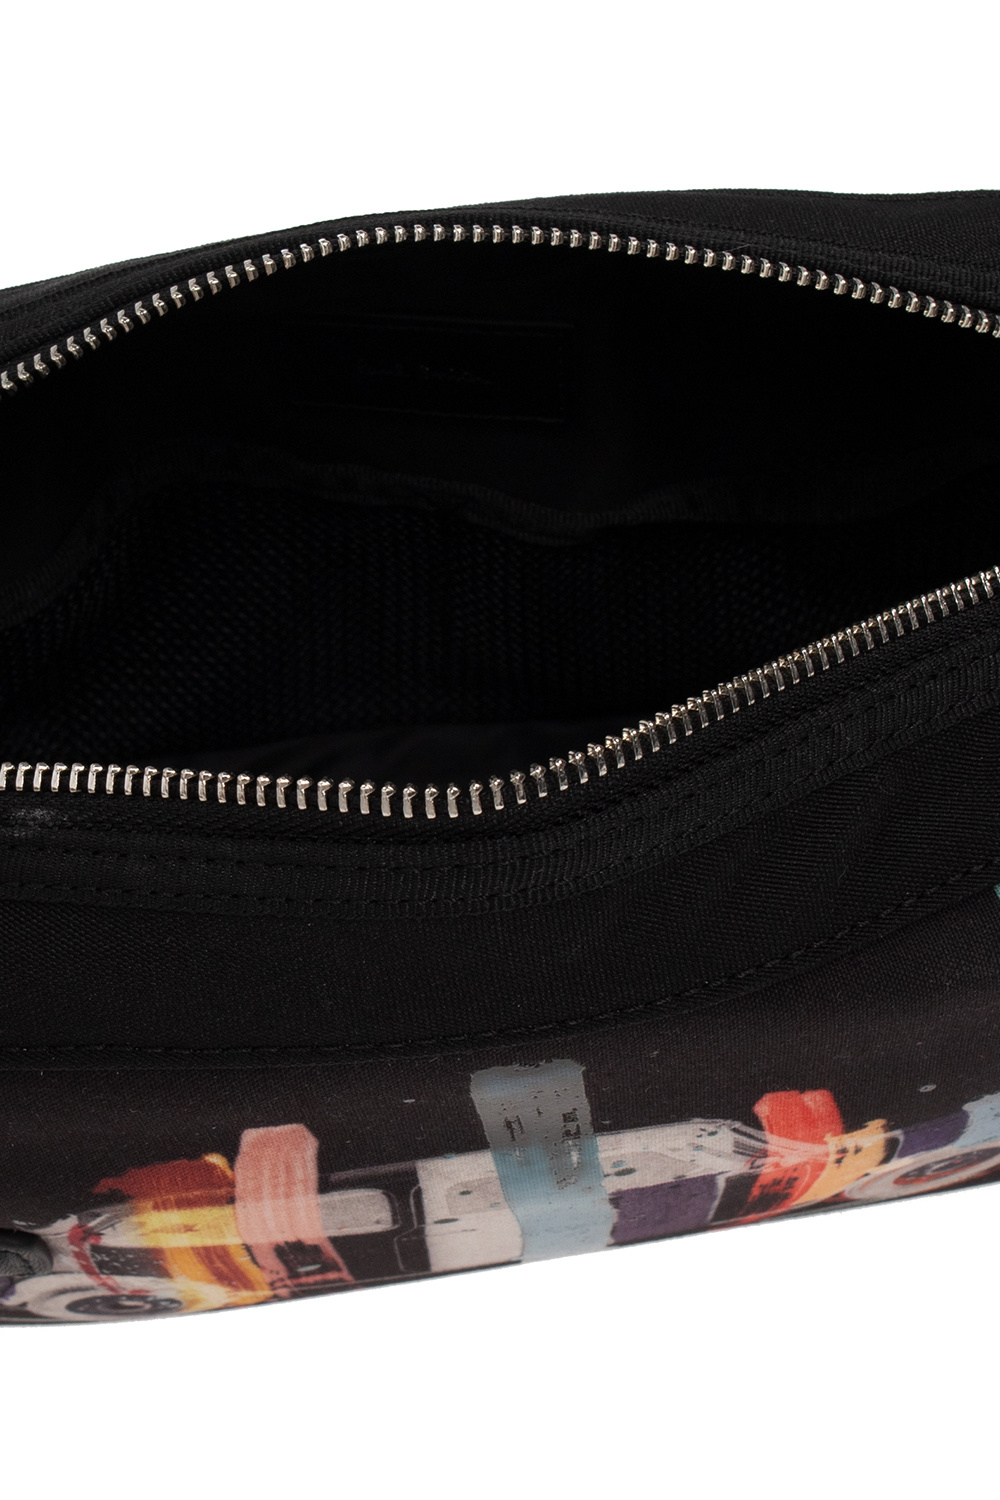 Paul Smith Jil Sander Tangle long-strap crossbody bag